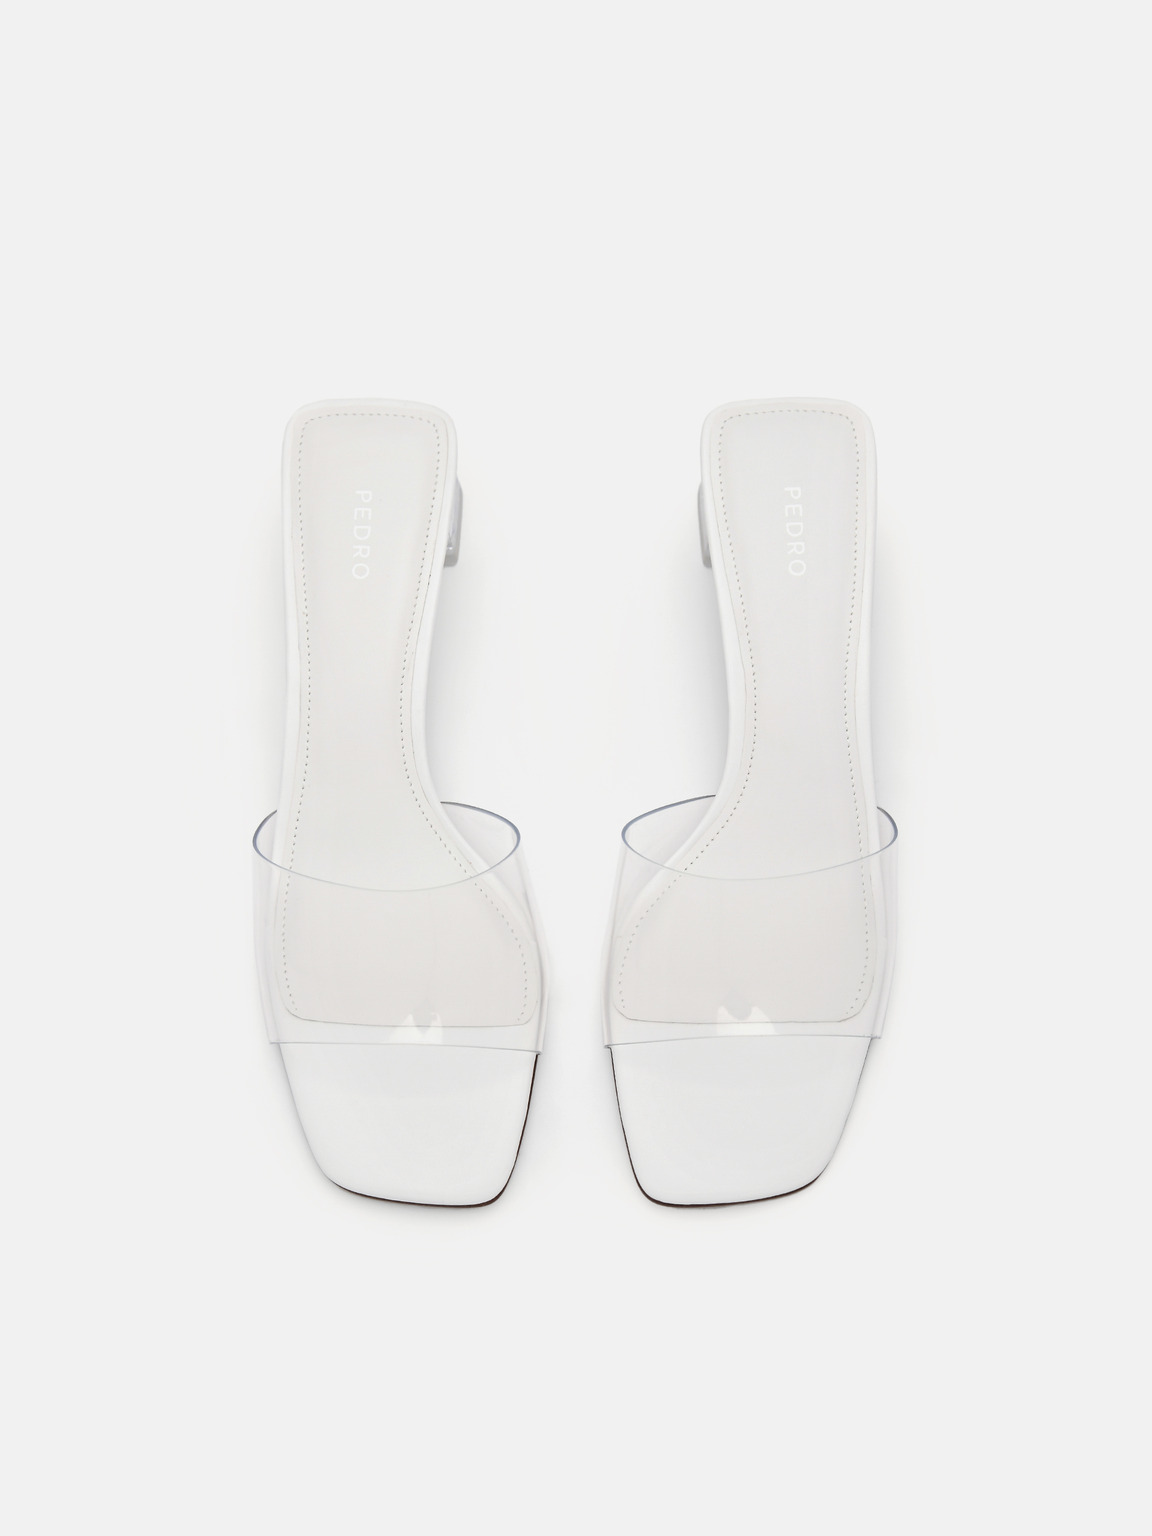 Megan Heel Sandals, White